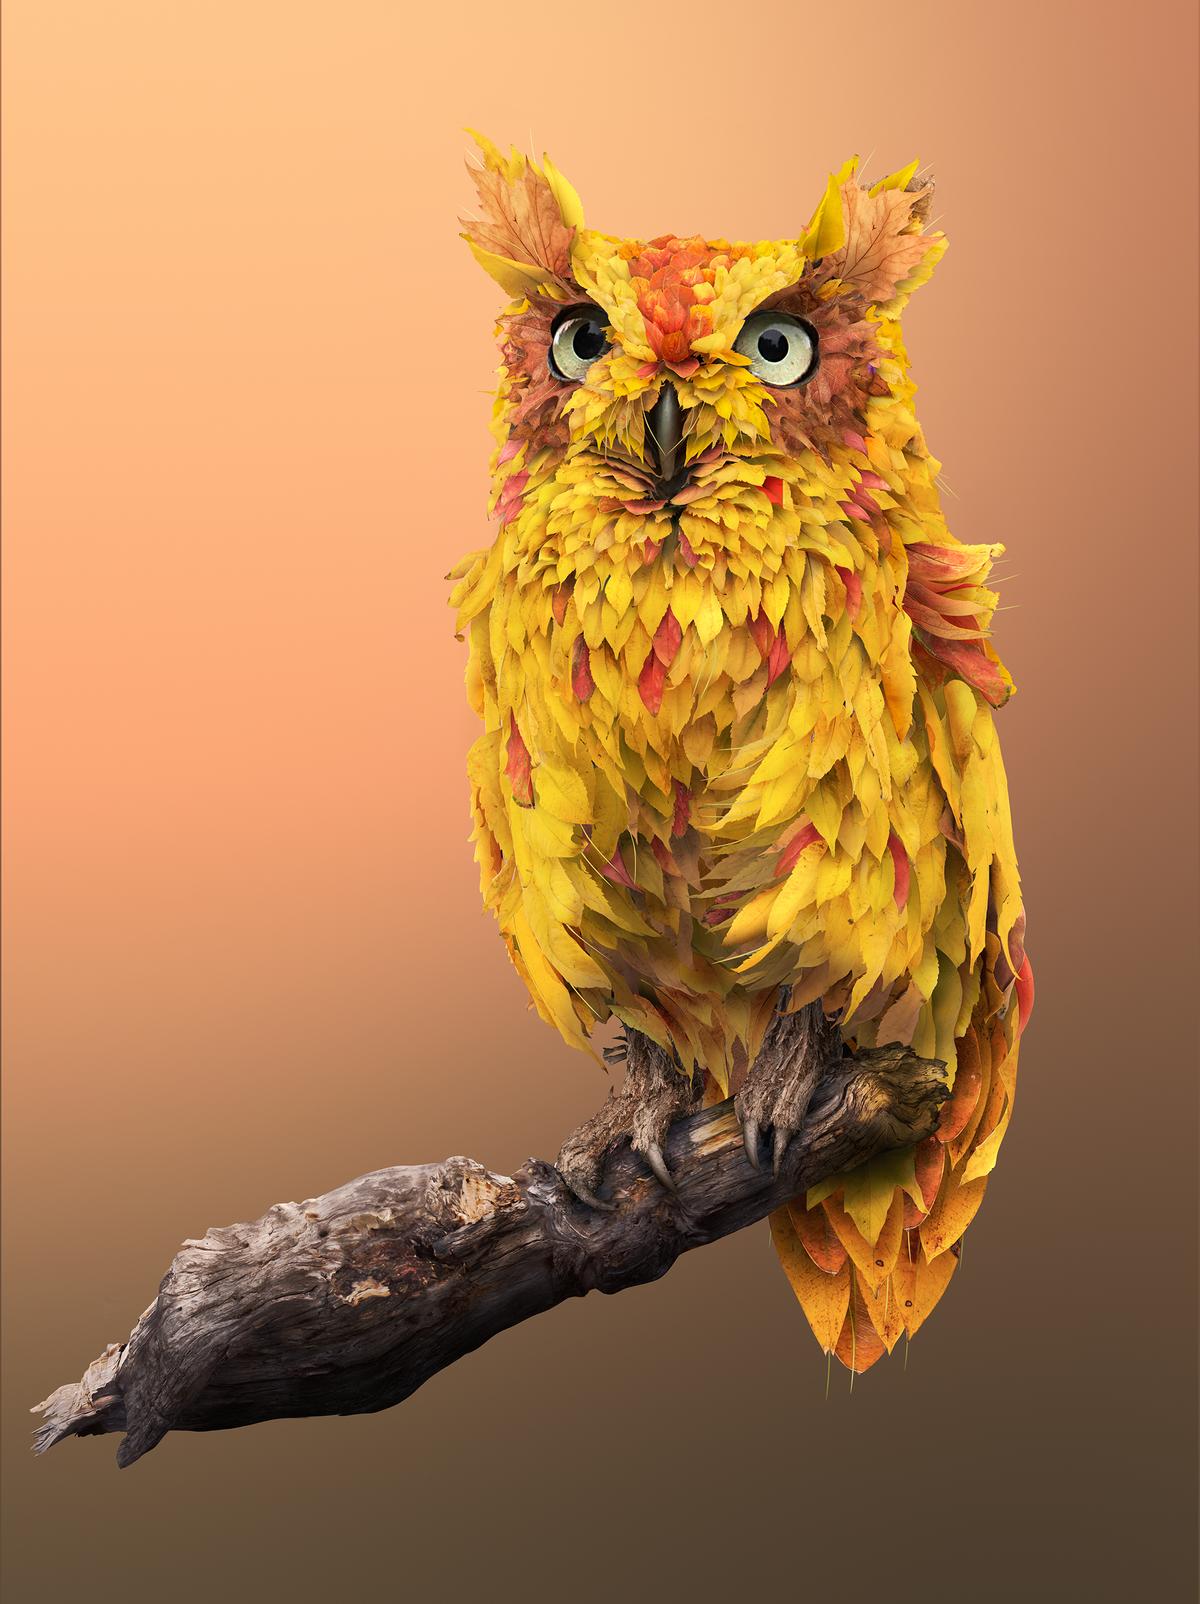 Yellowed leaves comprise this owl image. (Courtesy of <a href="https://www.instagram.com/joshdykgraaf/">Josh Dykgraaf</a>)